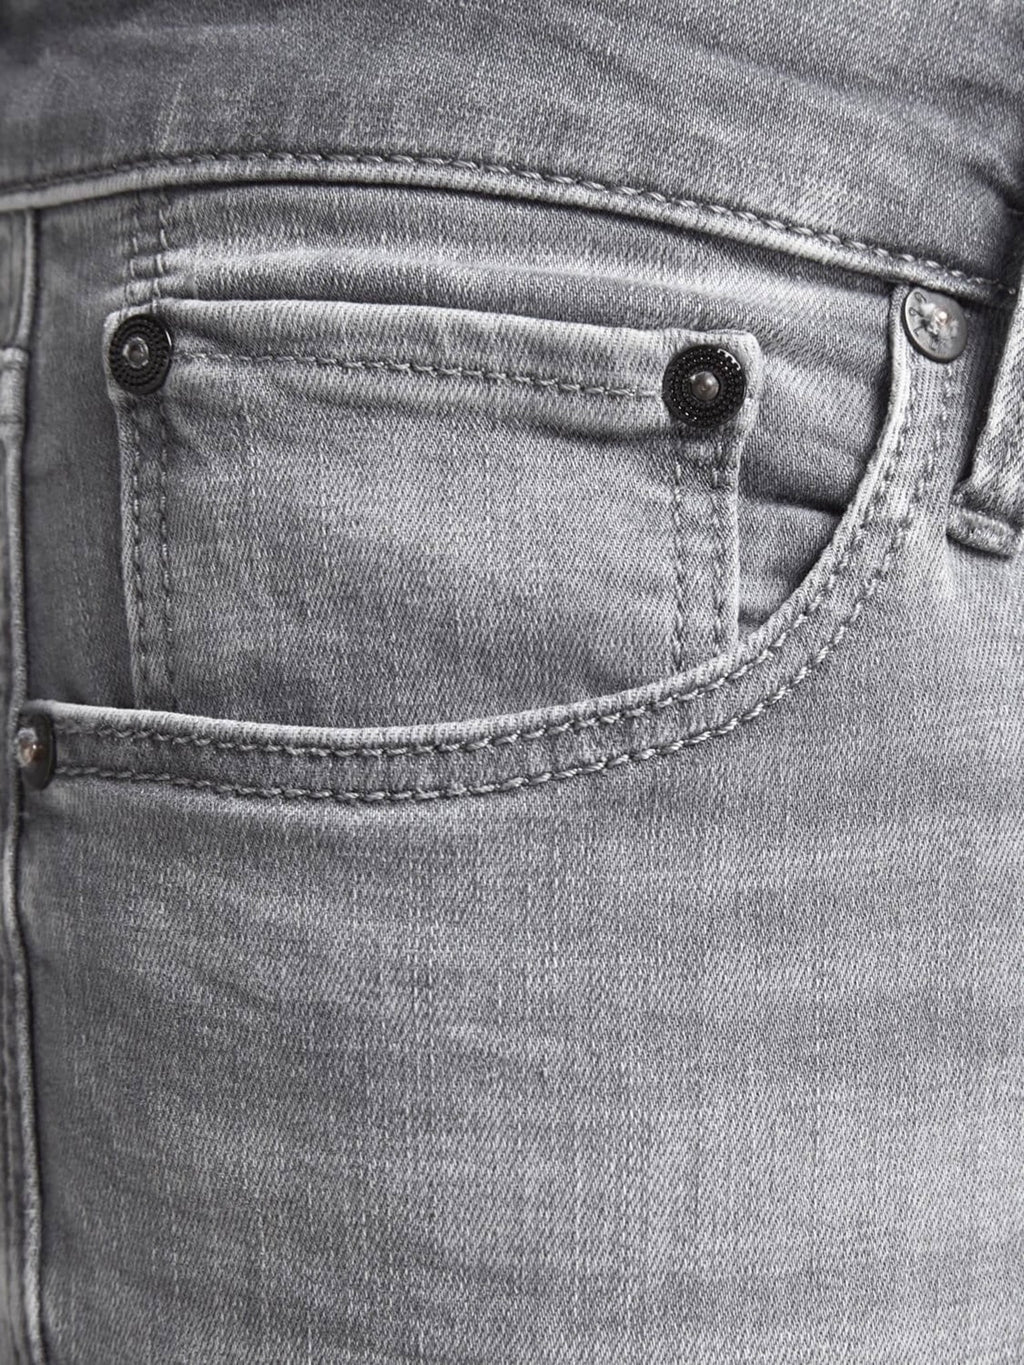 Glenn Original AM814 Slimfit jeans - Grey